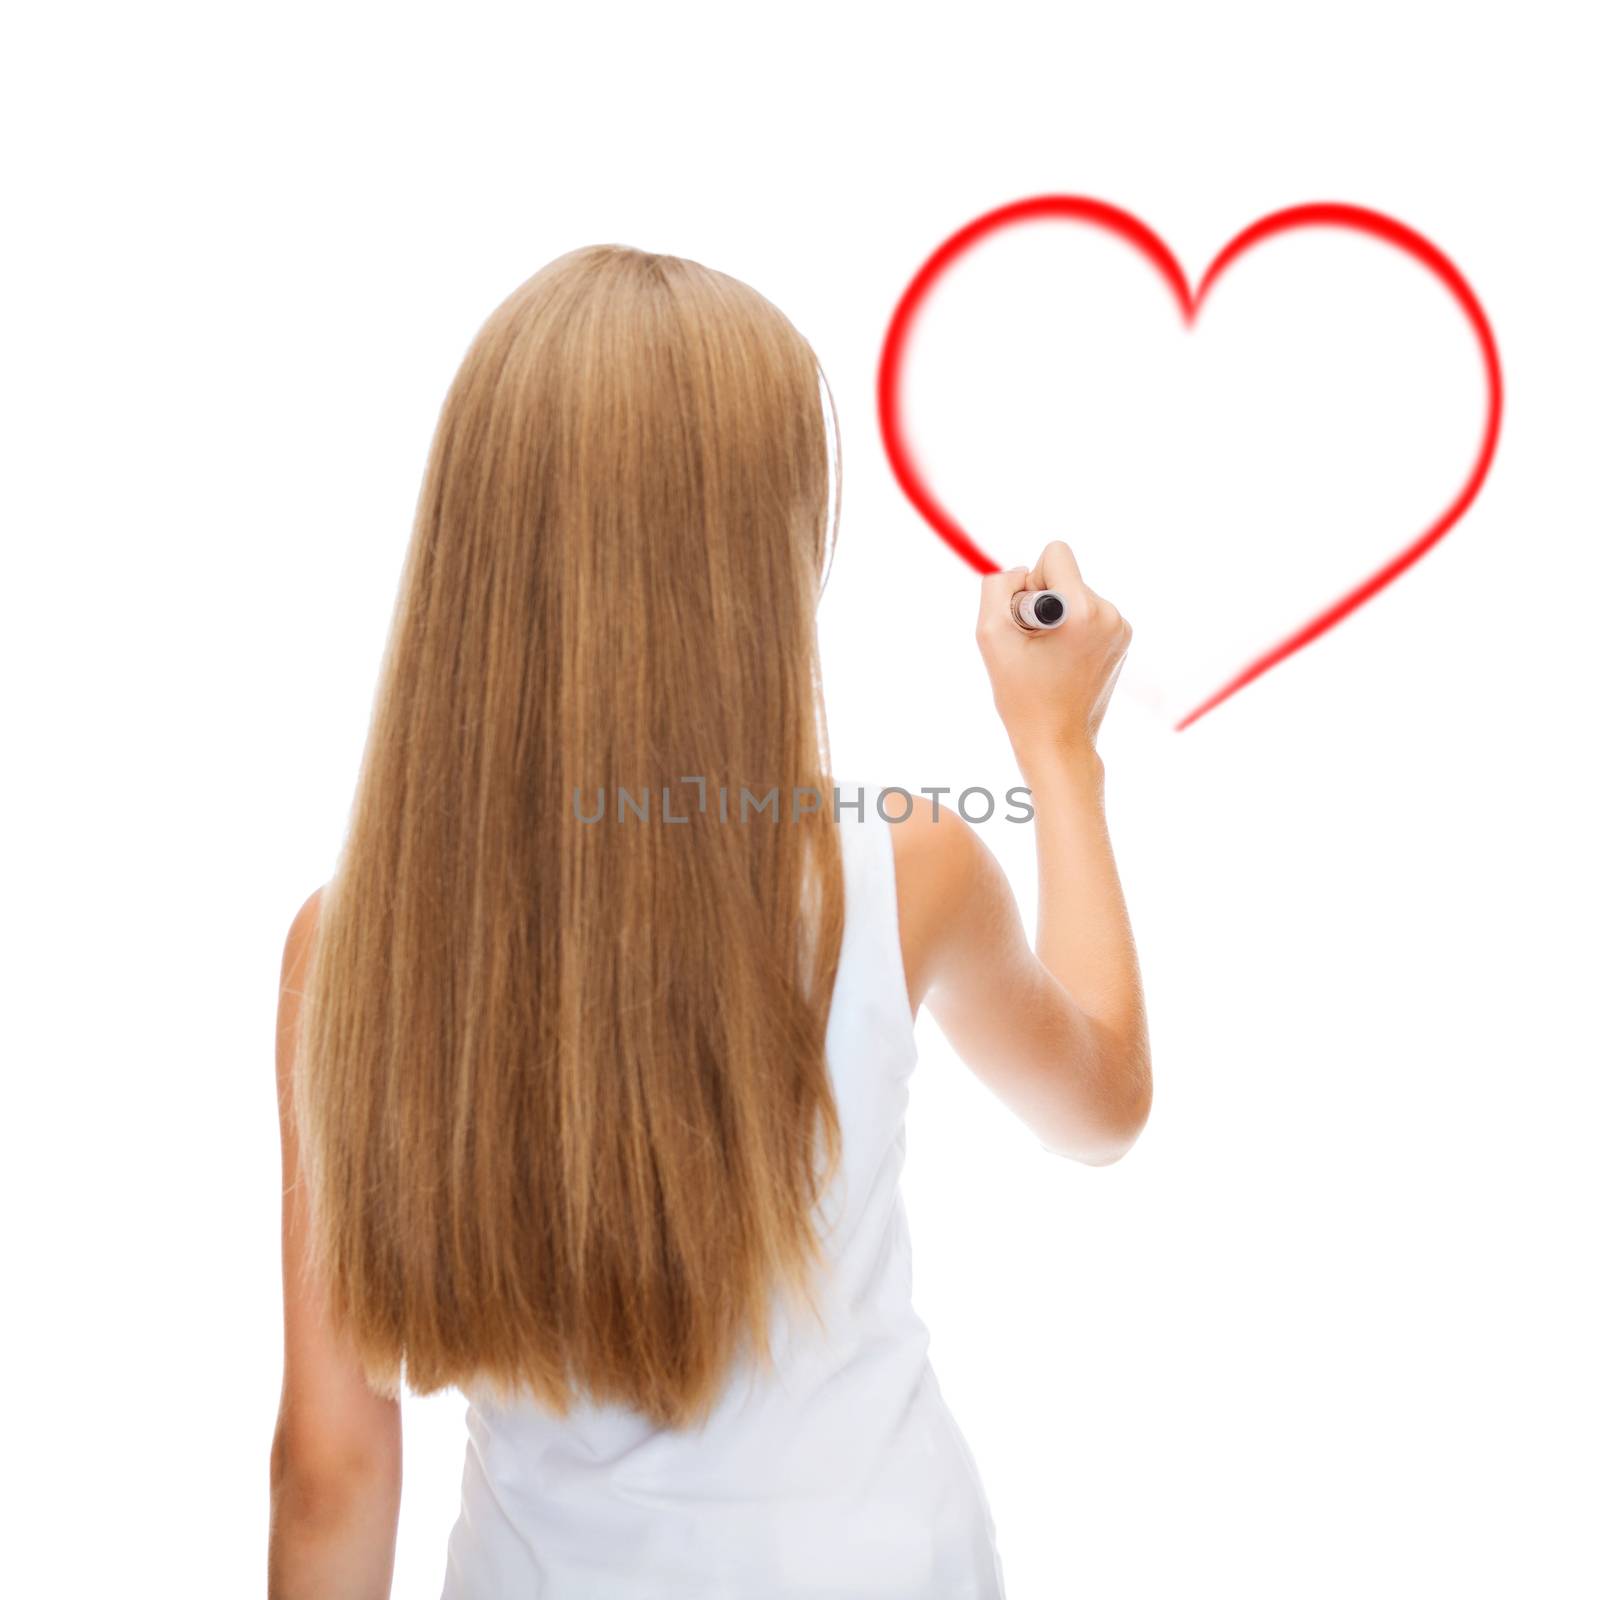 girl in shirt drawing heart on virtual screen by dolgachov